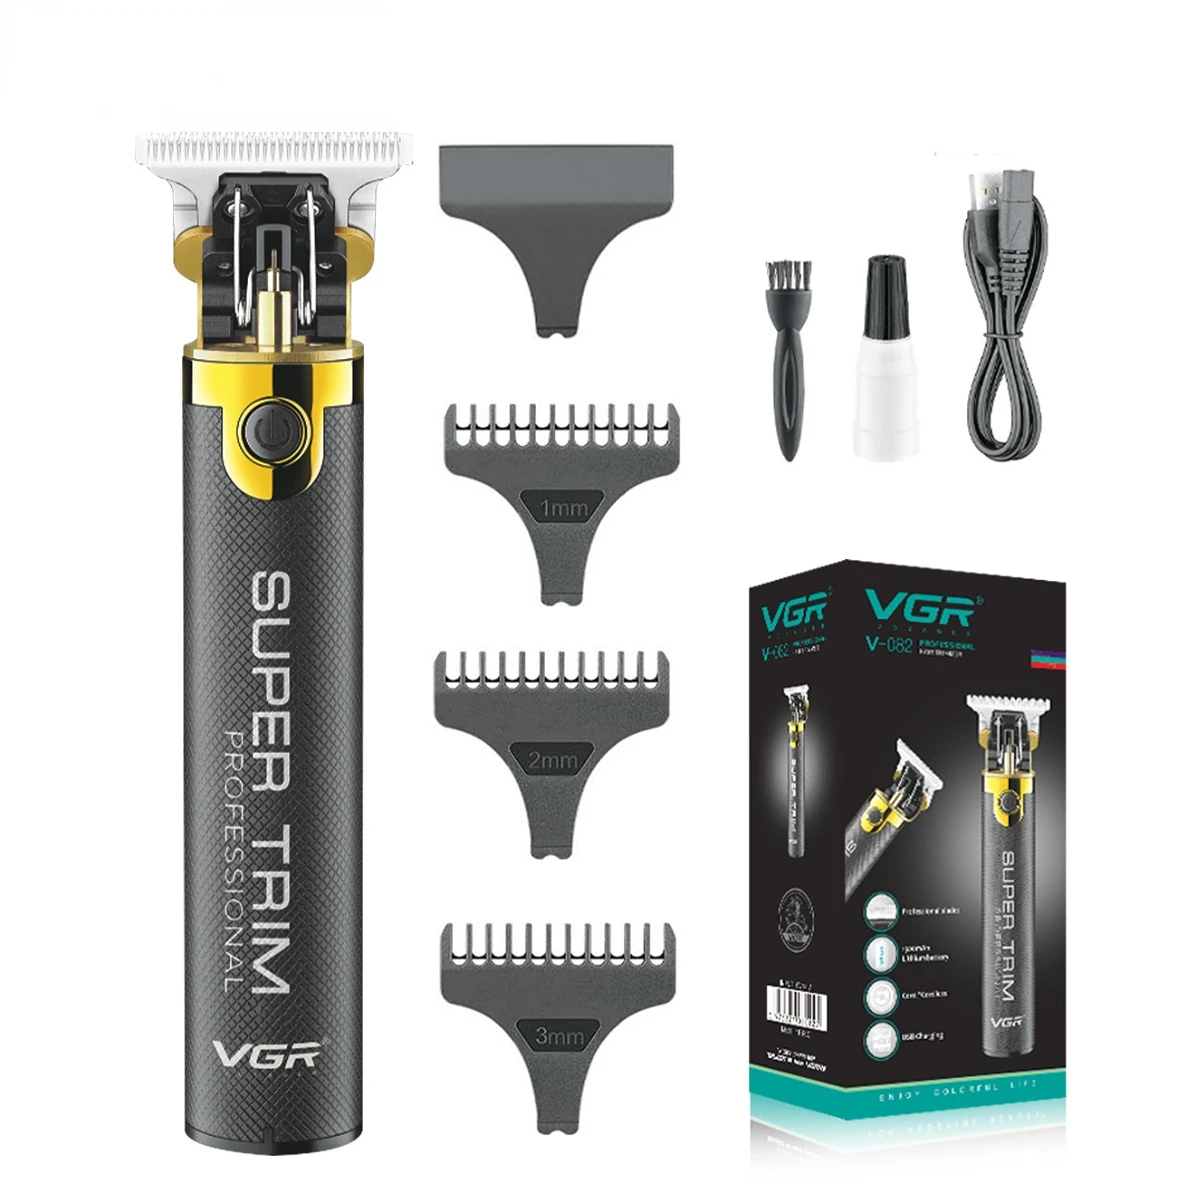 

VGR Professional Hair Clipper T9 Hair Cutting Machine Cordless Haircut Machine Rechargeable Bald Barber Trimmer for Men V-082